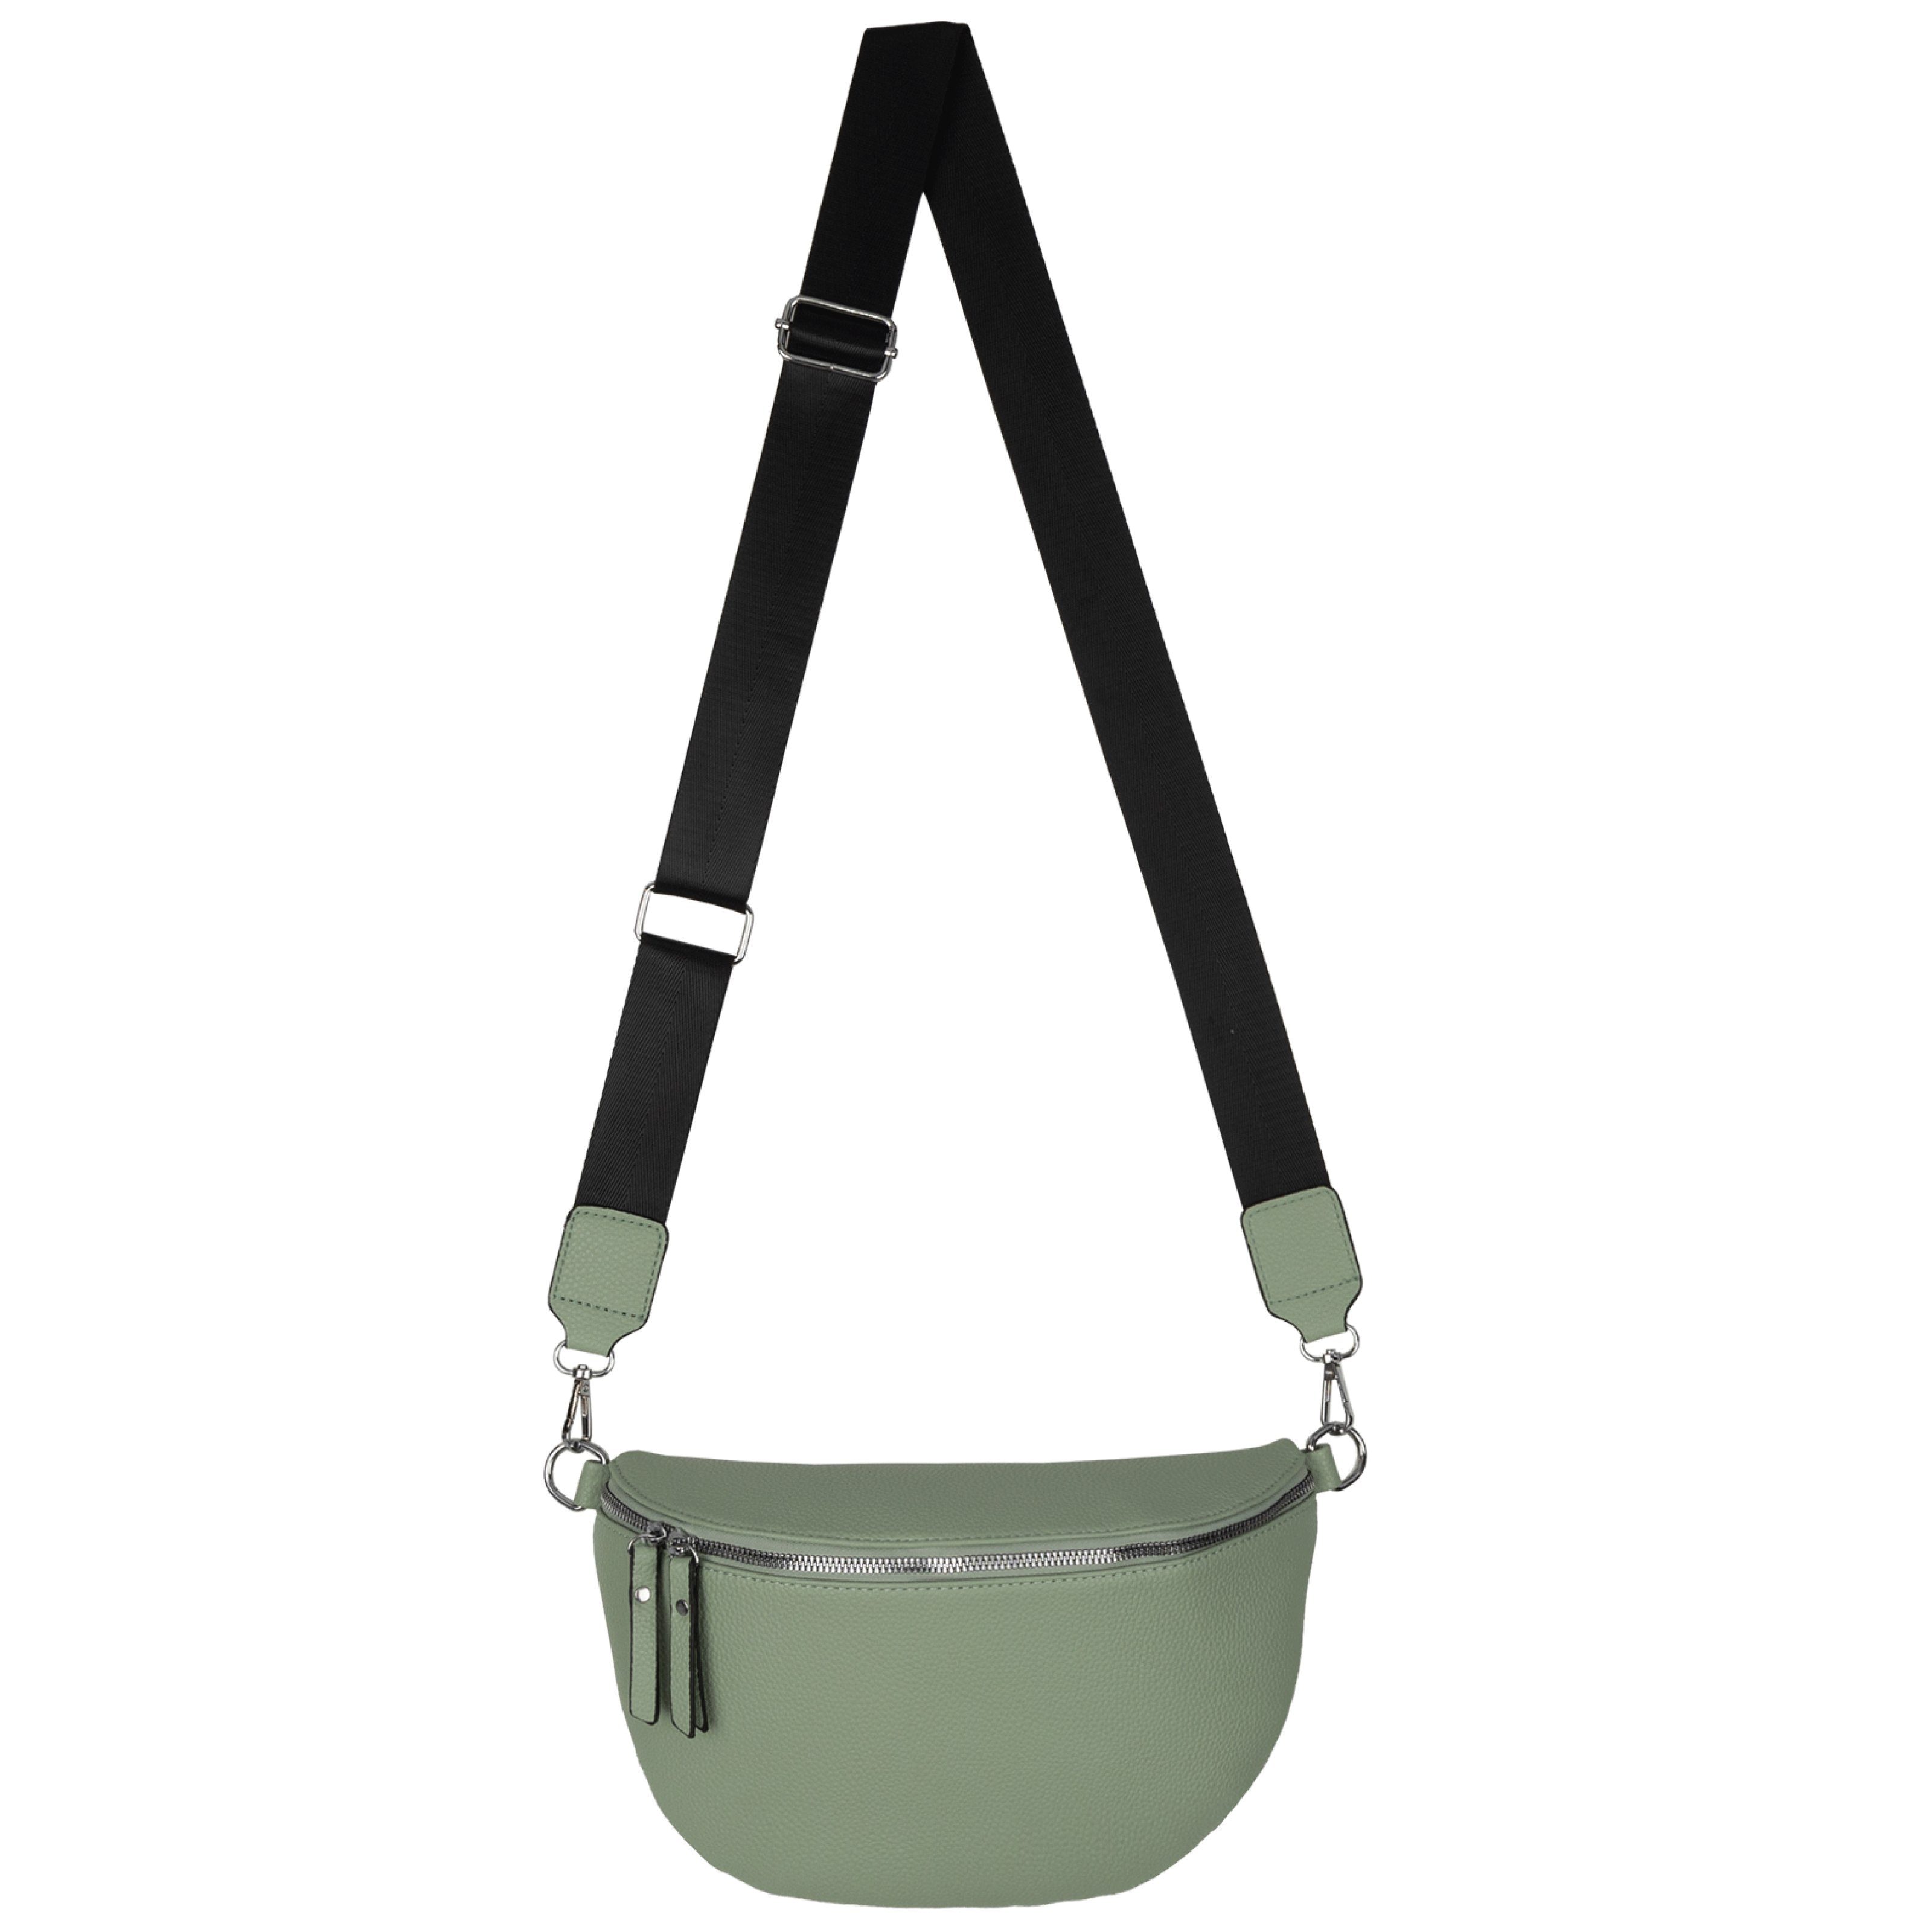 Italy, tragbar Hüfttasche GREEN Gürteltasche Kunstleder Crossbody-Bag Schultertasche, EAAKIE Umhängetasche CrossOver, Umhängetasche als XL Bauchtasche